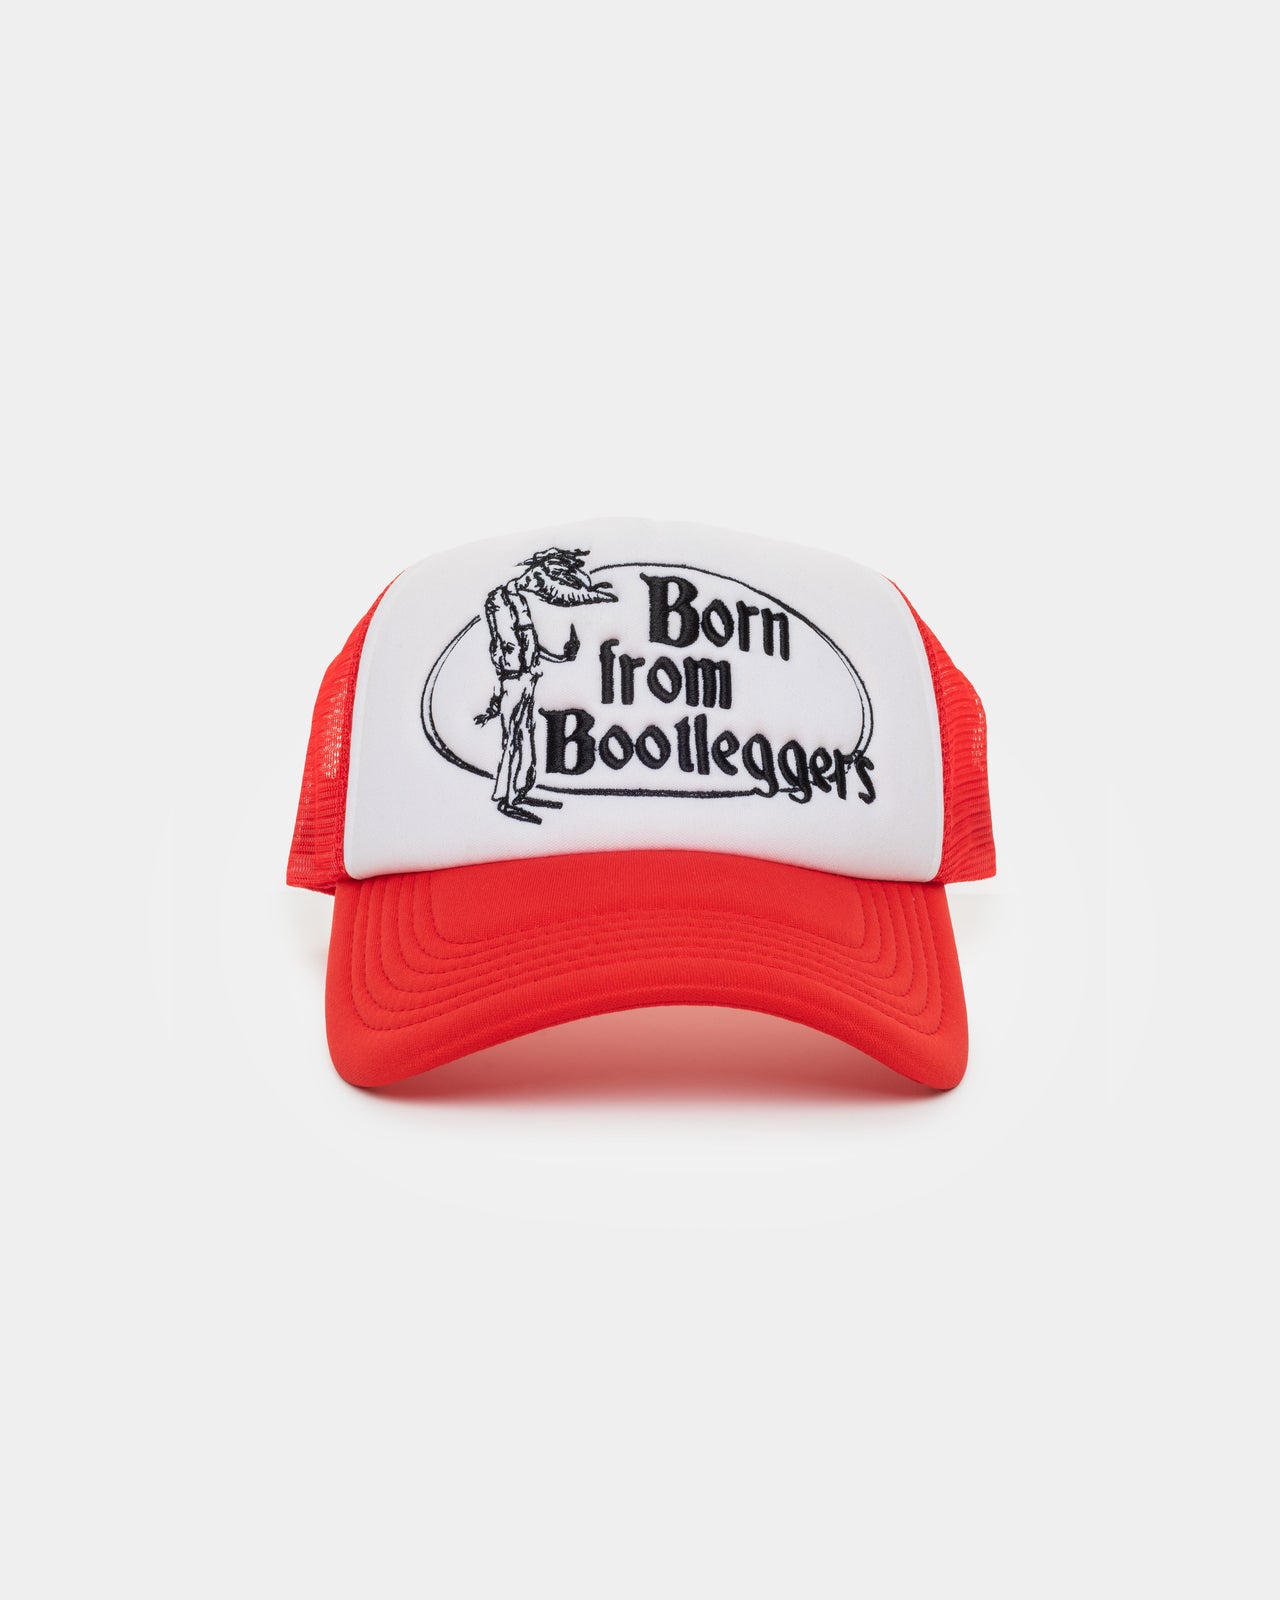 BORN FROM BOOTLEGGERS TRUCKER HAT (RED)